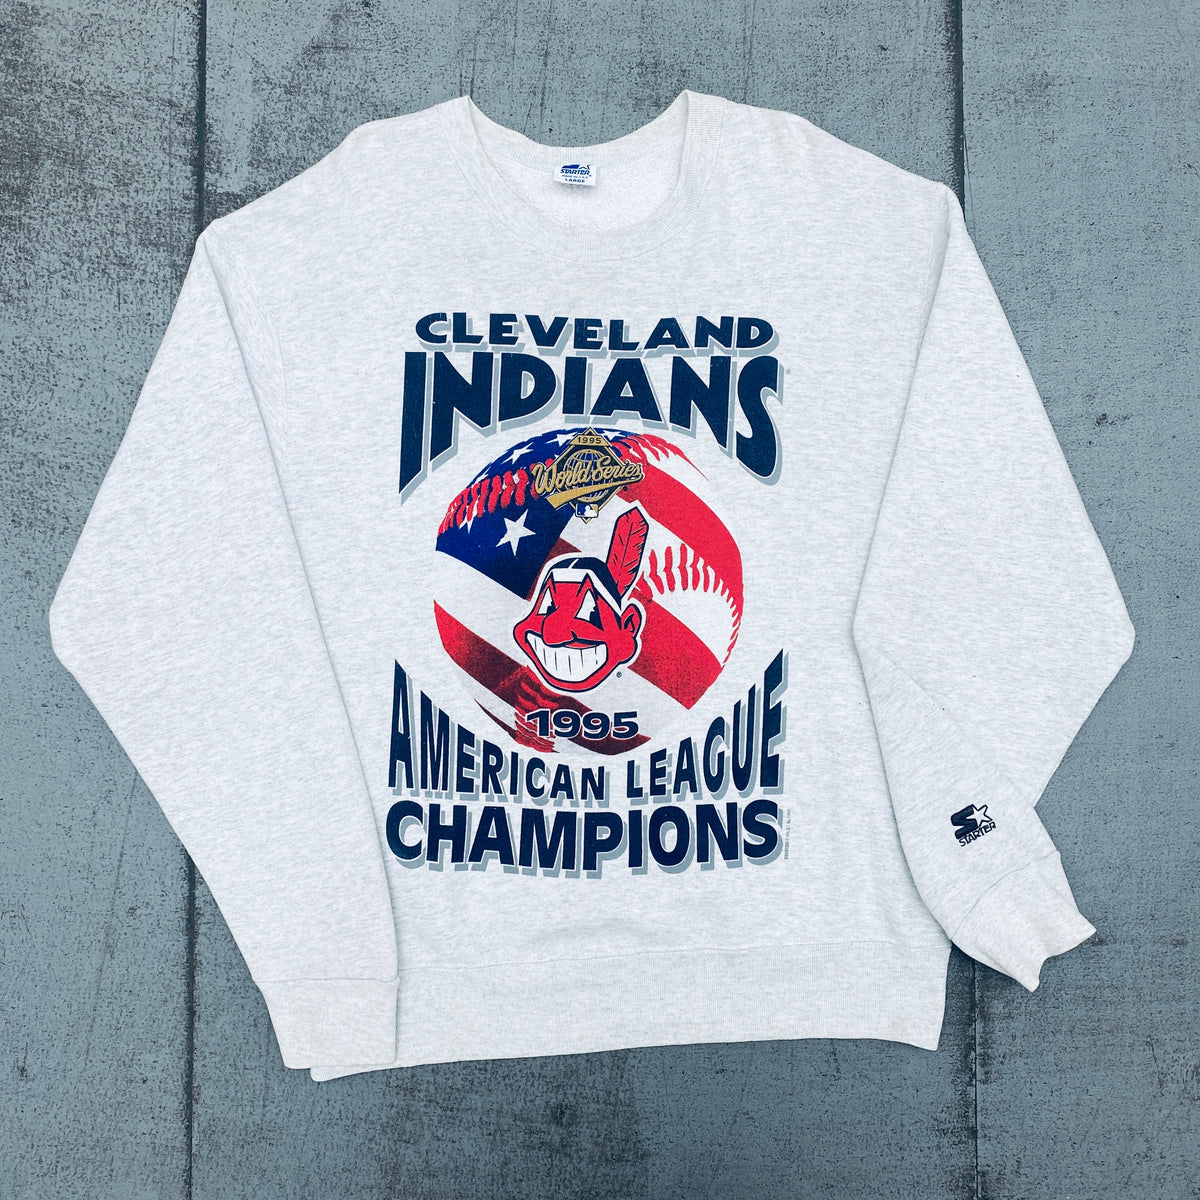 Vintage Starter T Shirt Atlanta Braves 1995 World Series